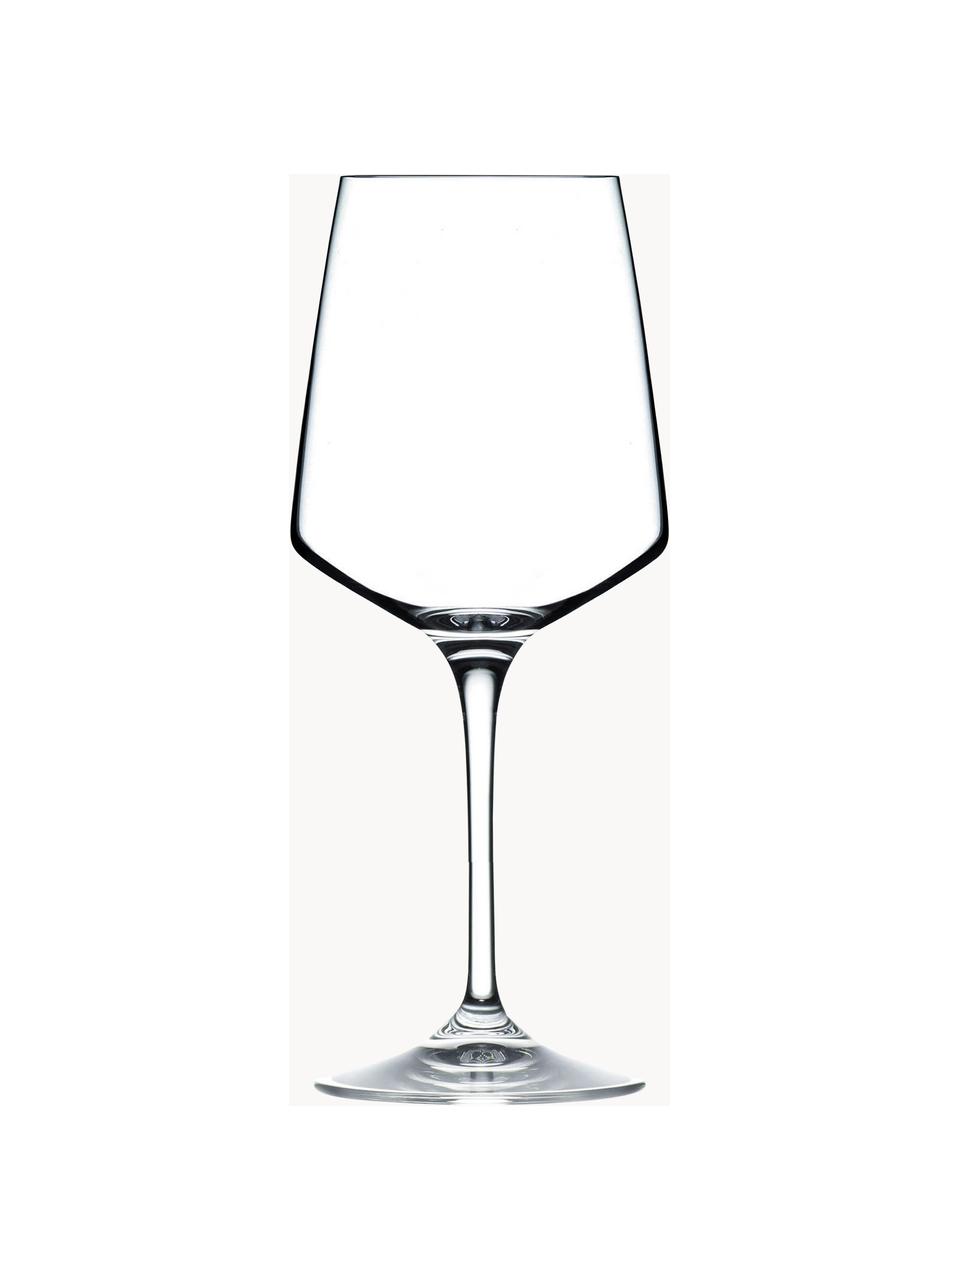 Bicchiere da vino bianco Aria 6 pz, Cristallo, Trasparente, Ø 9 x Alt. 21 cm, 386 ml